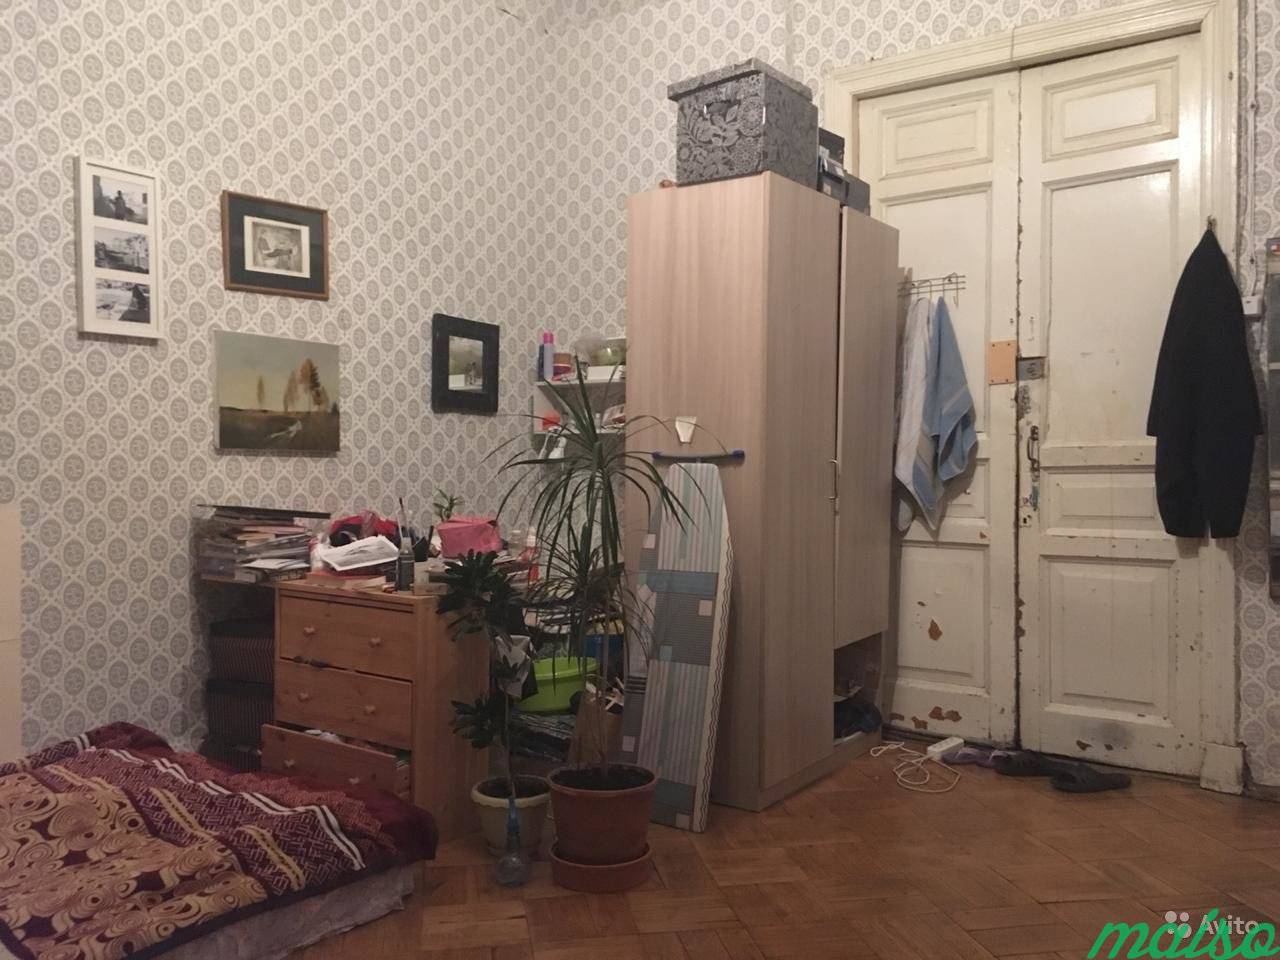 Комната 18 м² в 6-к, 3/5 эт. в Санкт-Петербурге. Фото 3